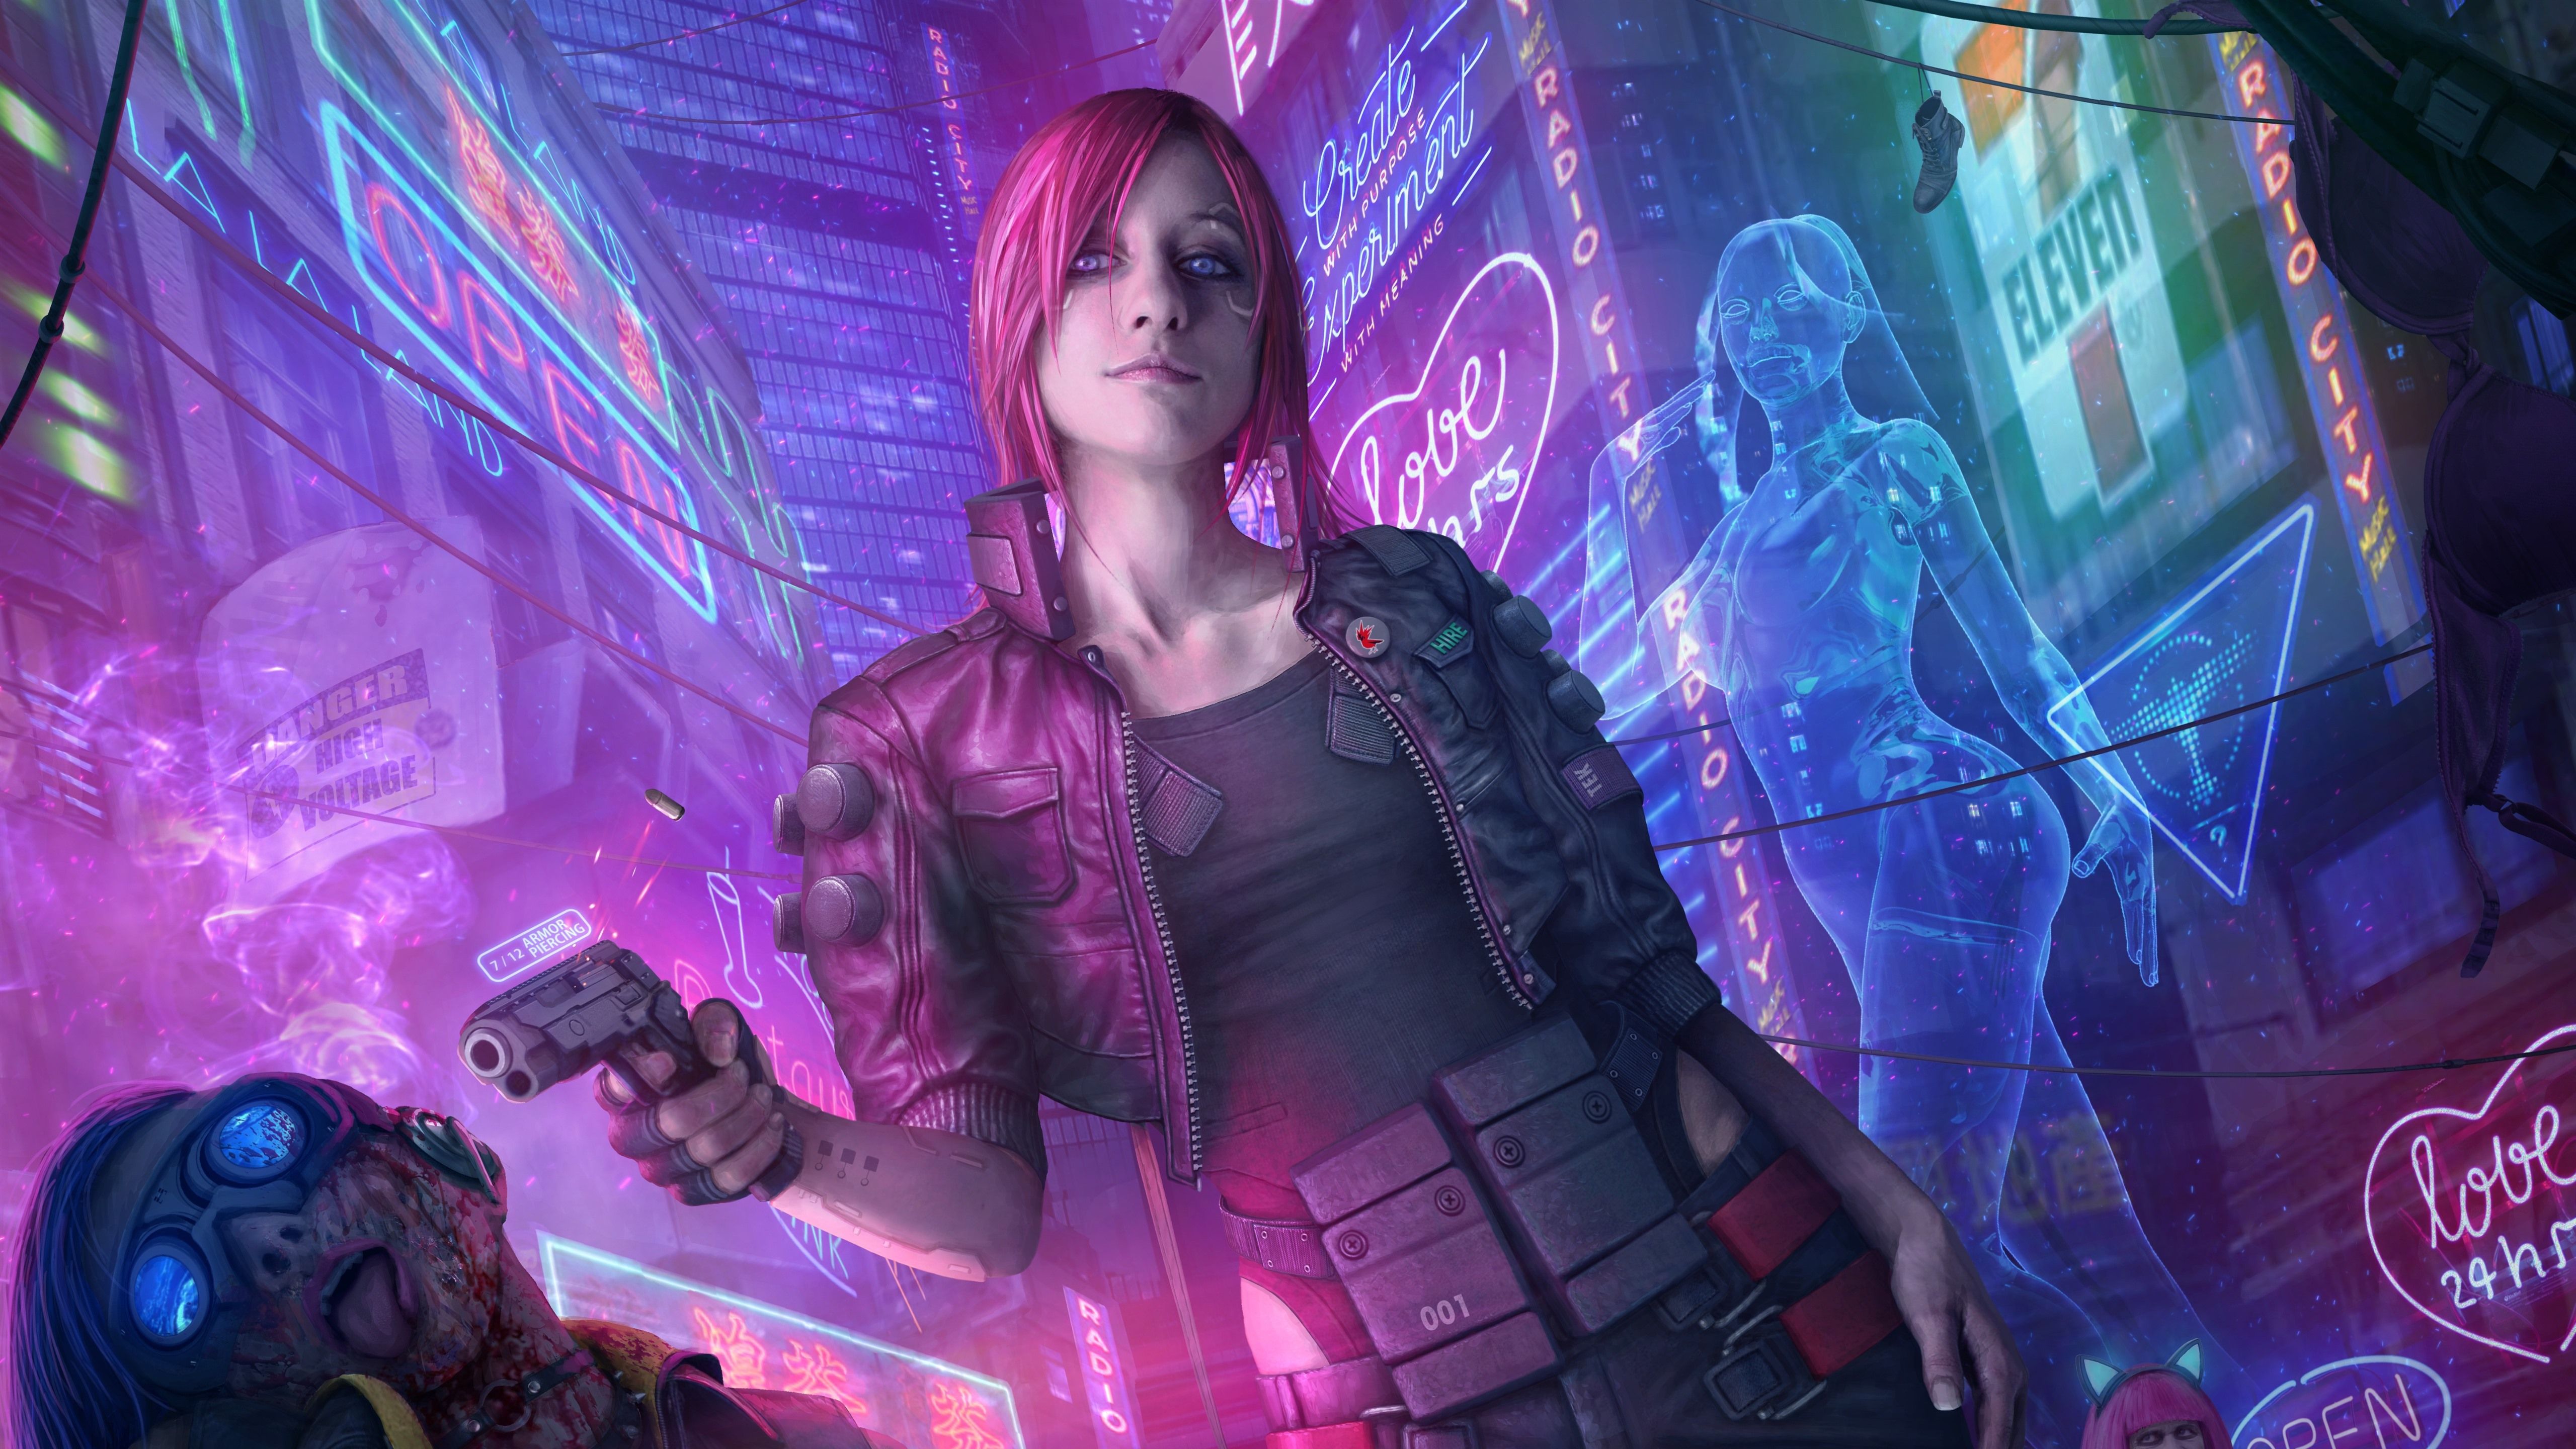 Wallpaper Cyberpunk pink hair girl, gun, city 5120x2880 UHD 5K Picture, Image